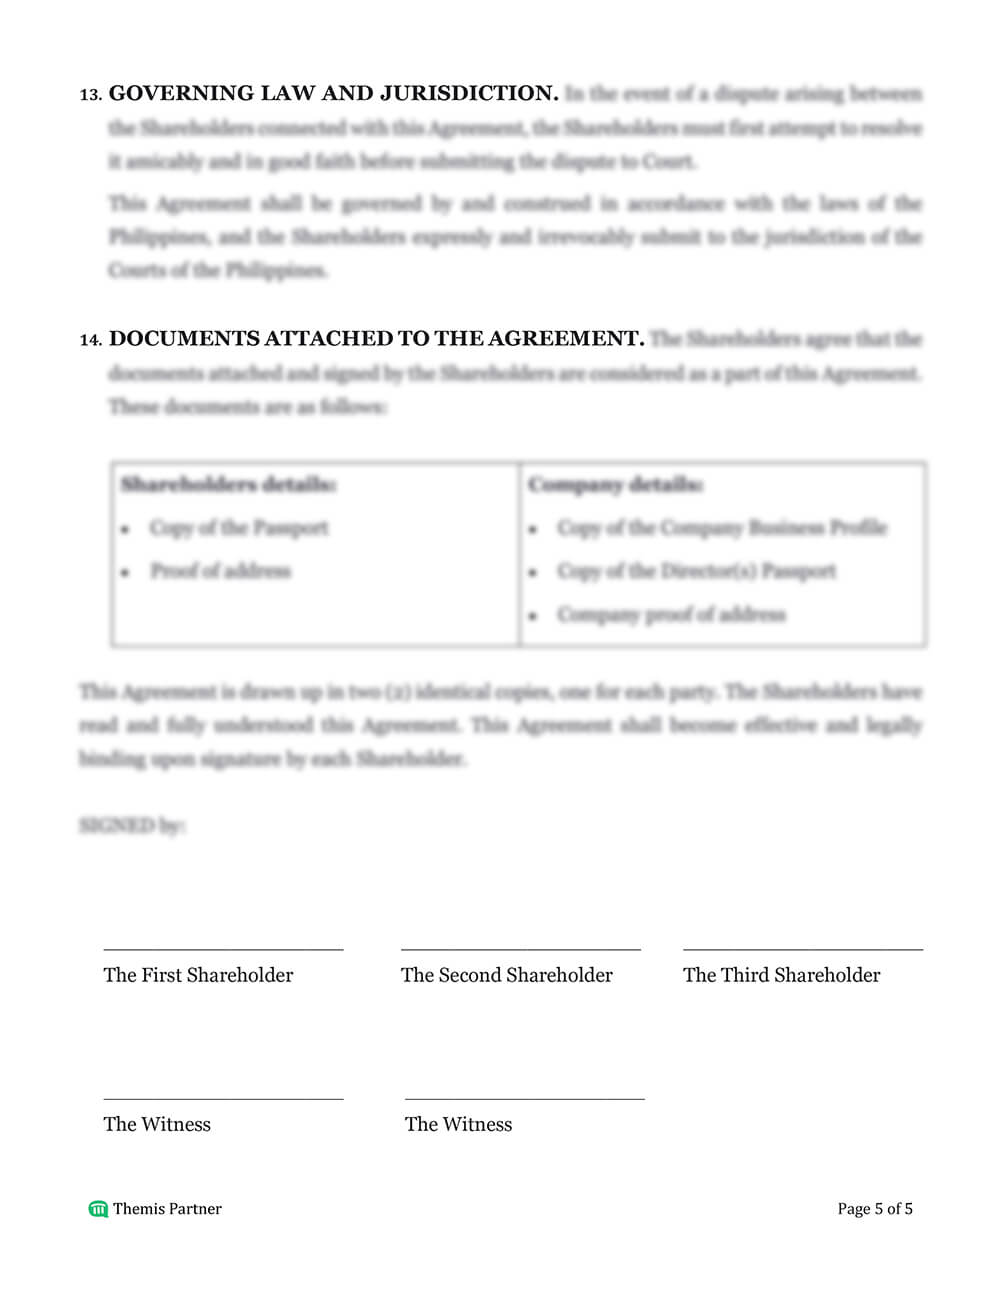 Shareholders agreement template 5